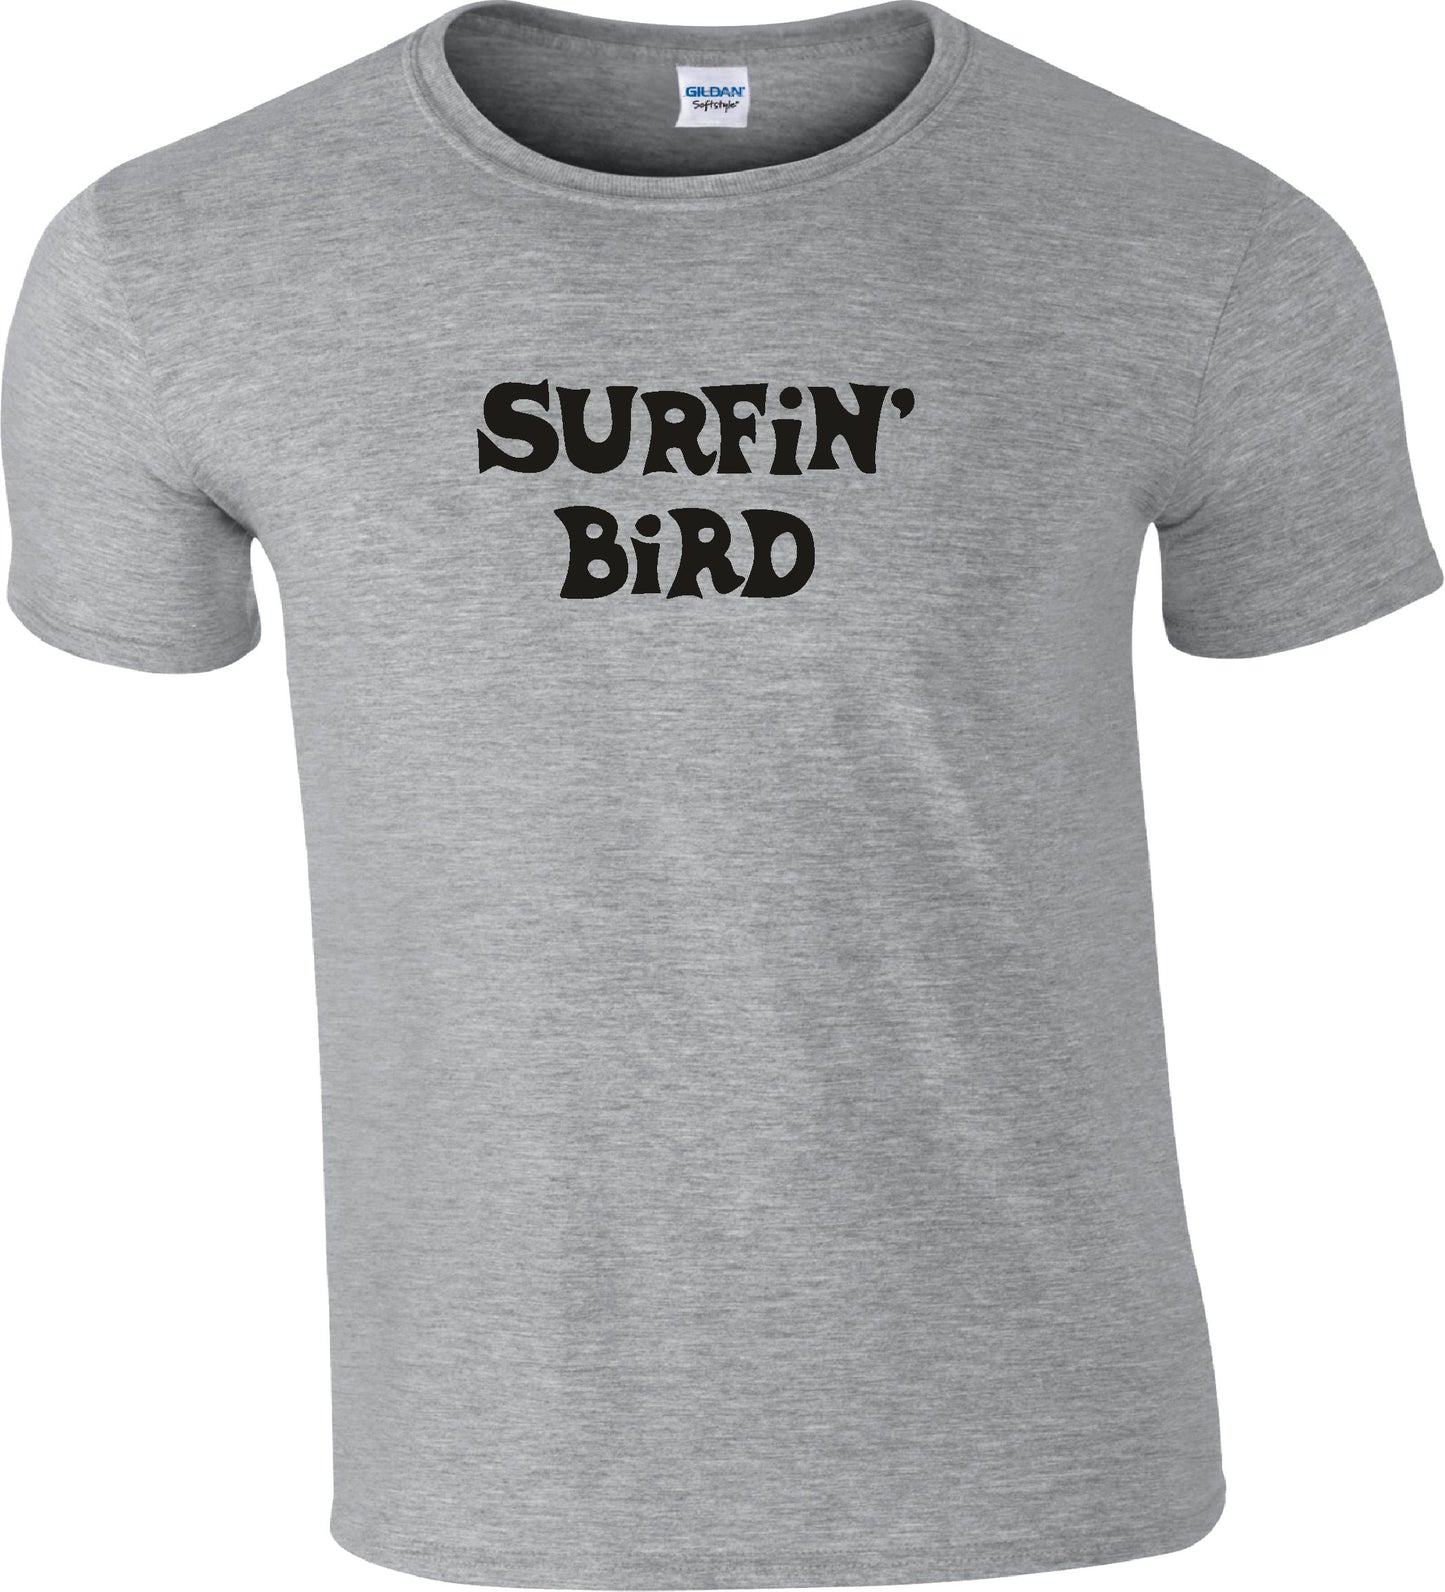 Surfin' Bird T-Shirt - 60s Retro Surf Rock, Various Colours